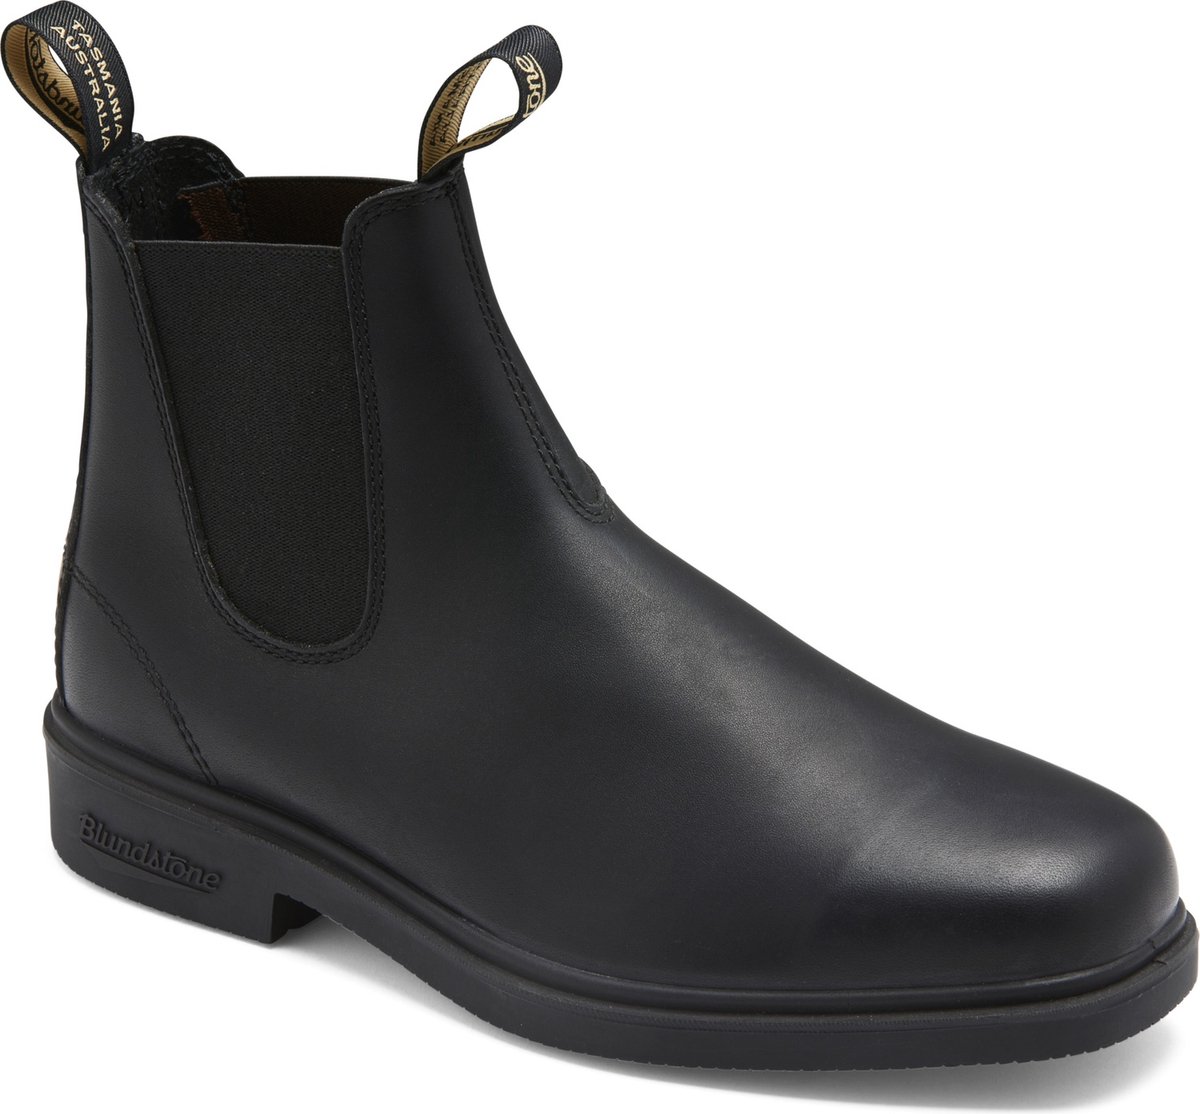 Blundstone Stiefel Boots #063 Voltan Leather (Dress Series) Voltan Black-4.5UK